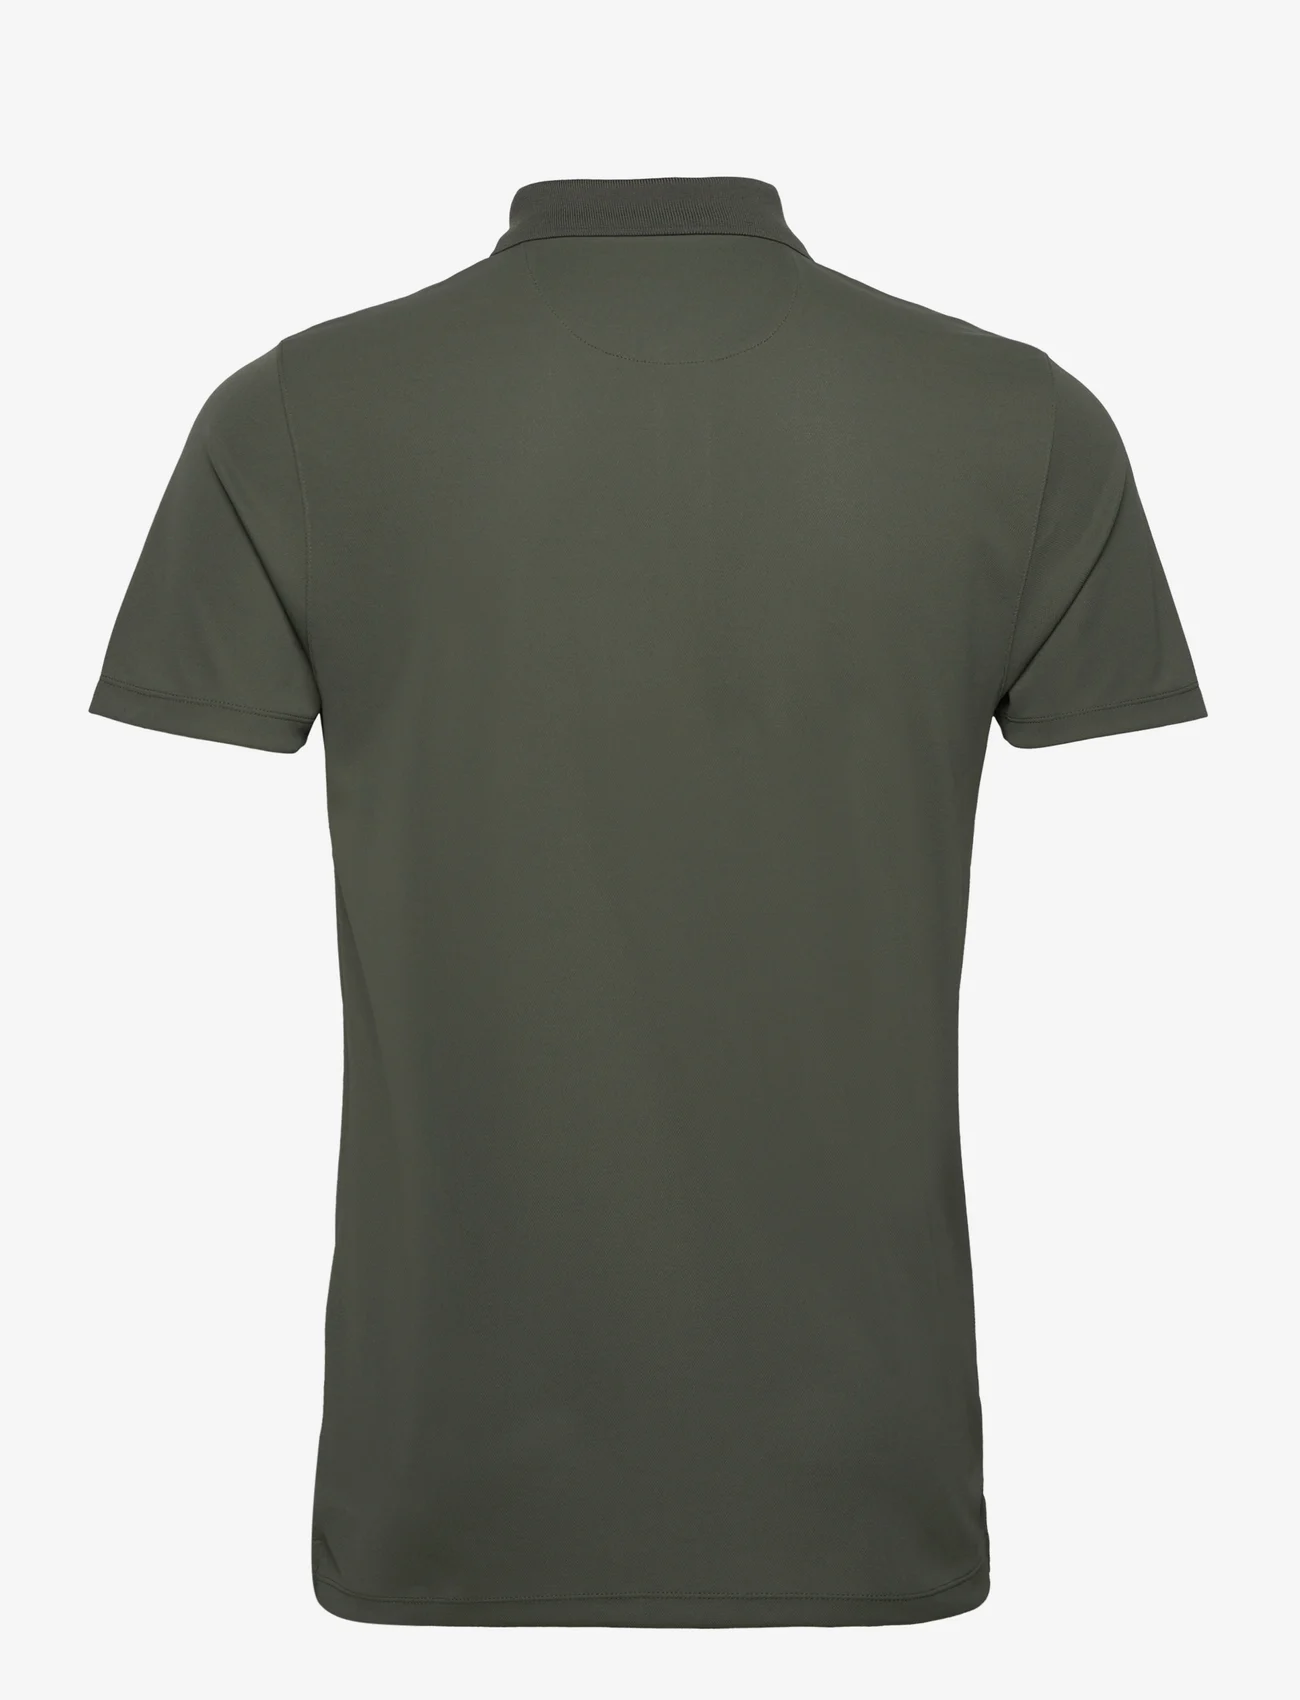 Lyle & Scott Sport - Golf Tech Polo Shirt - short-sleeved polos - cactus green - 1